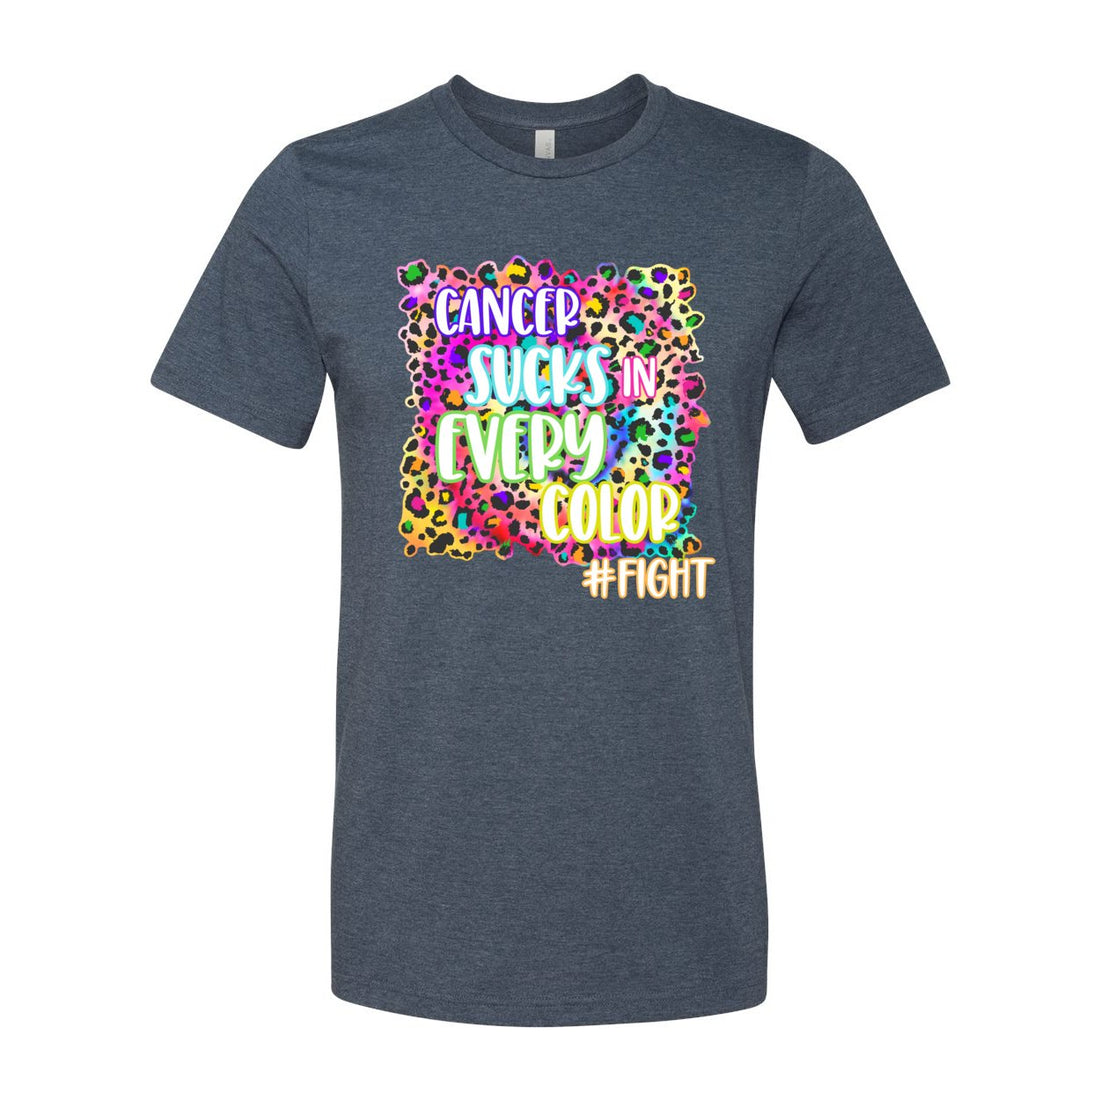 Cancer Sucks - T-Shirts - Positively Sassy - Cancer Sucks